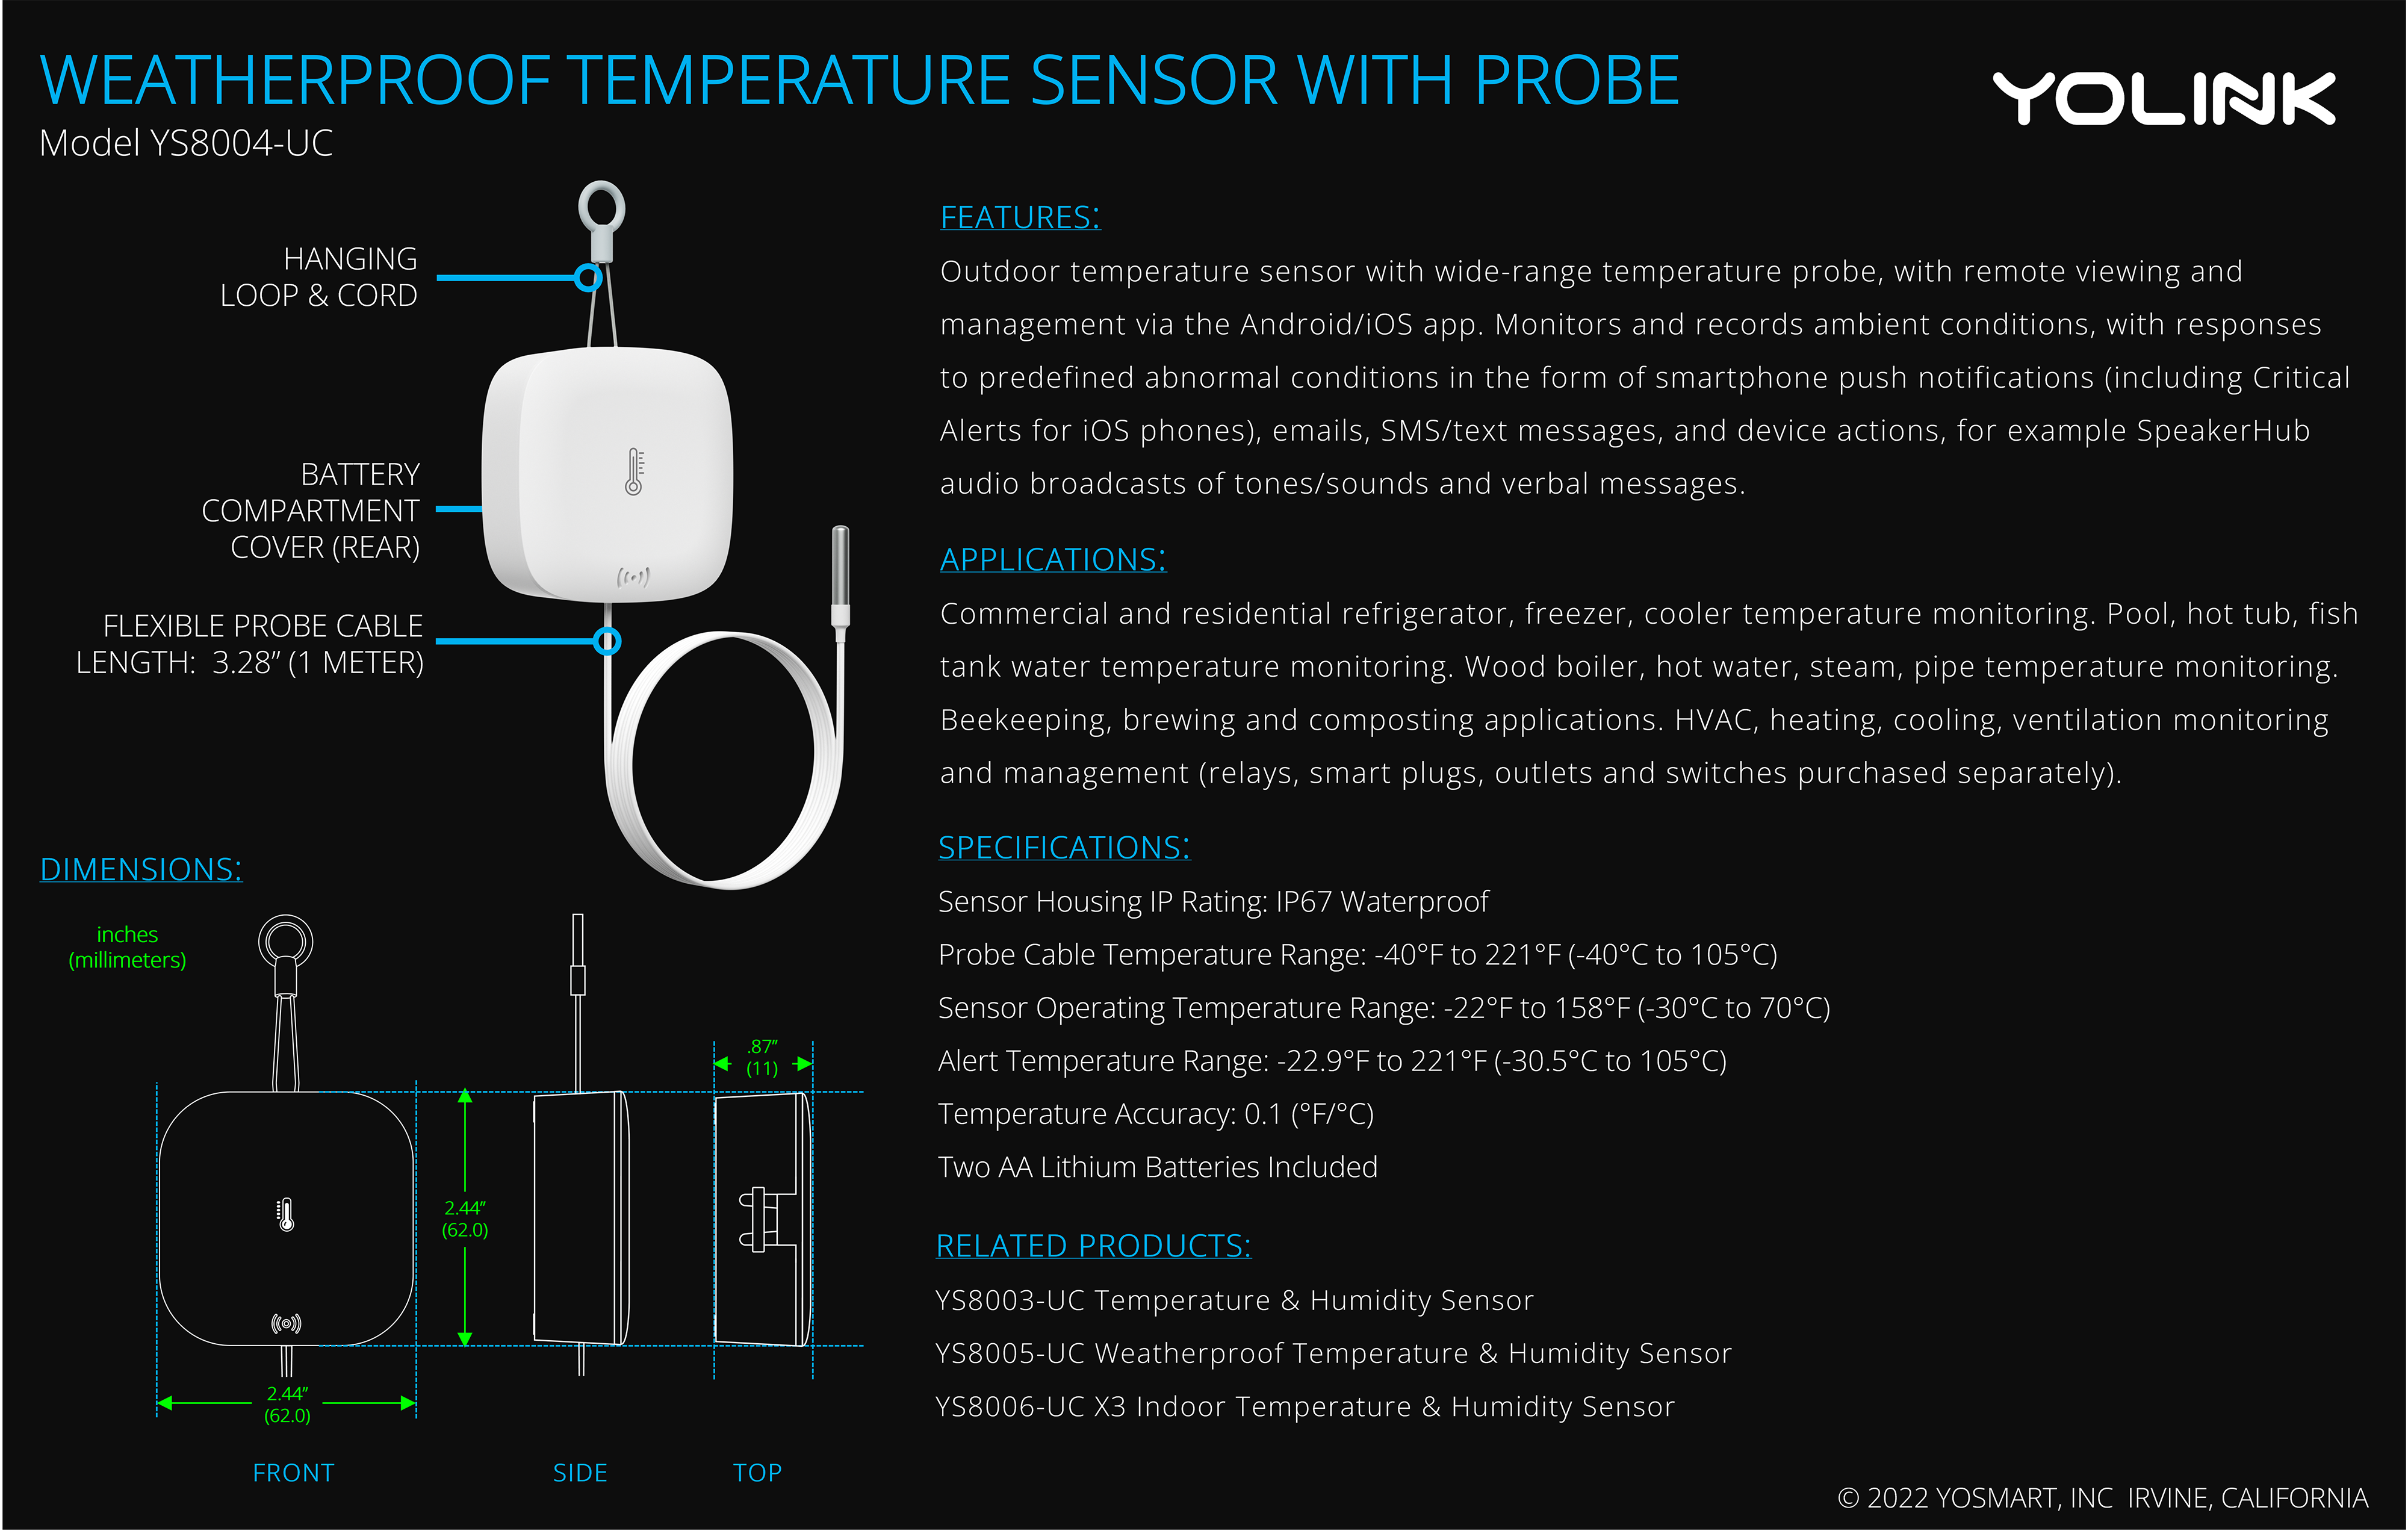 Temperature sensor for a wide temperature range